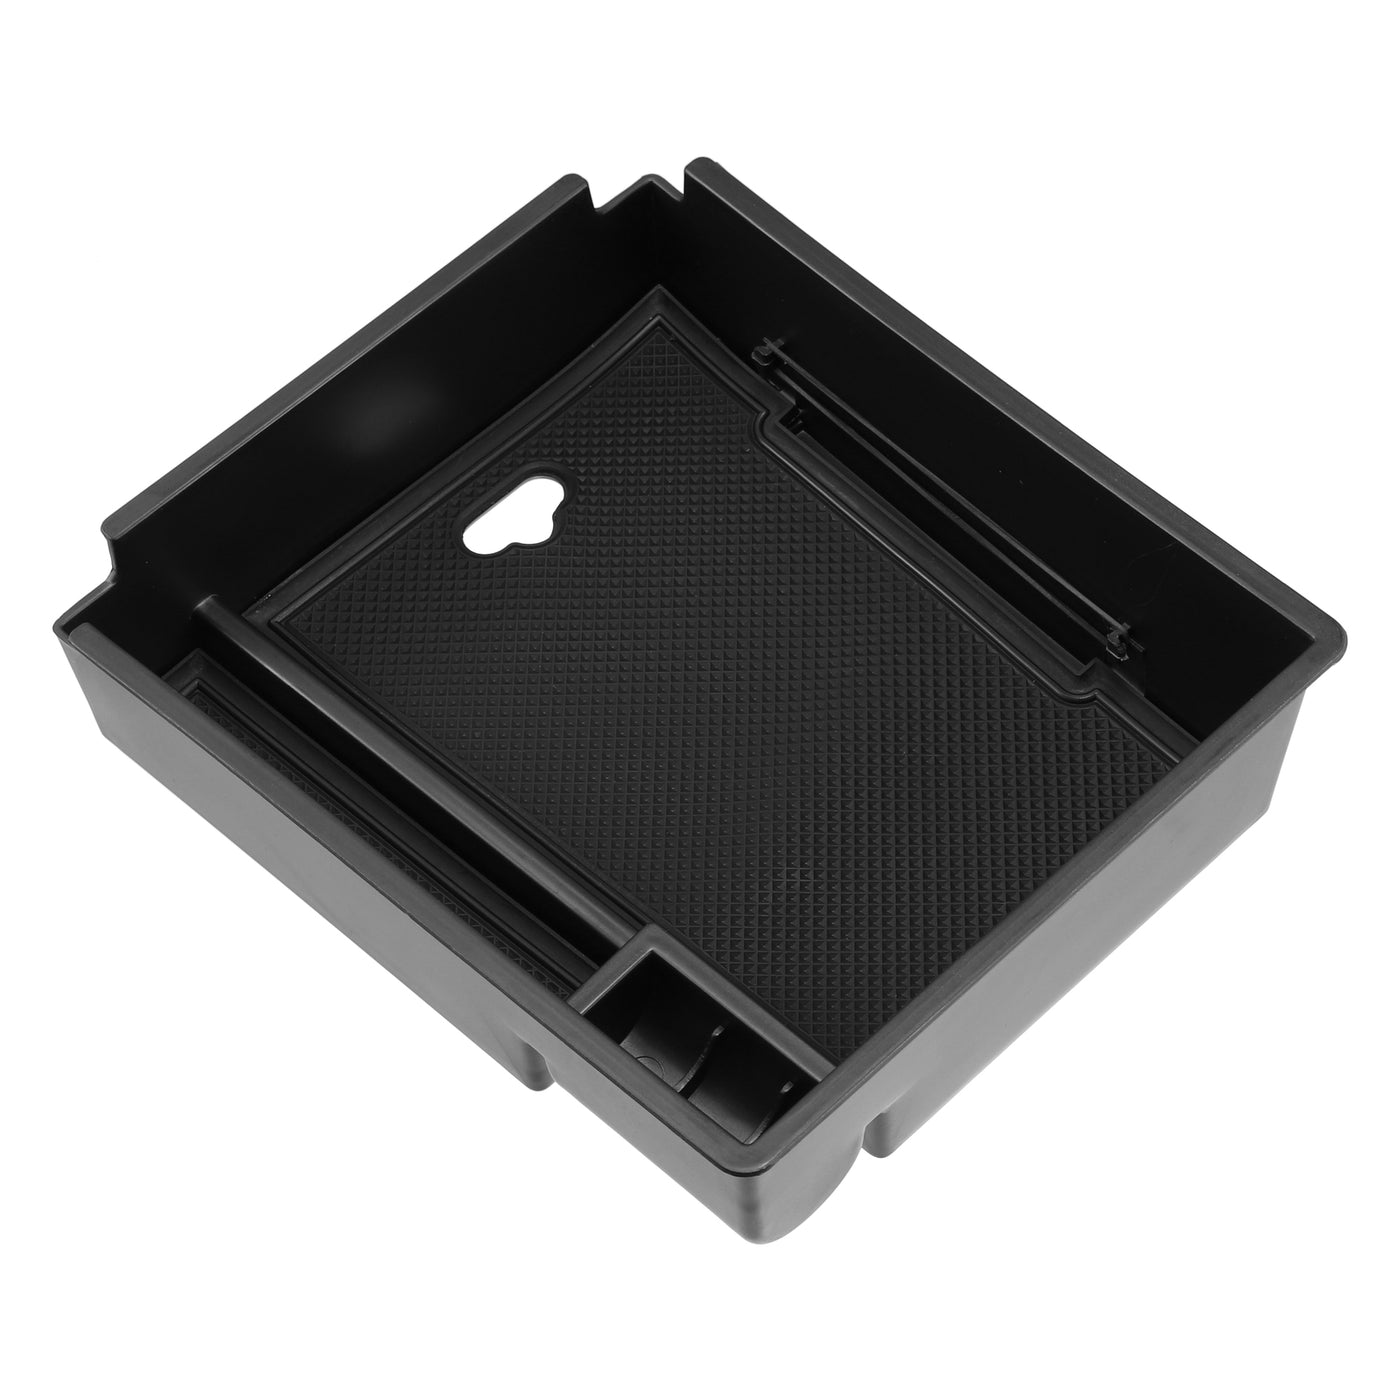 X AUTOHAUX Car Auto Center Console Organizer Tray Storage Box Accessories for Hyundai Tucson NX4 2021-2022 Interior Armrest Box Insert Tray Container Black